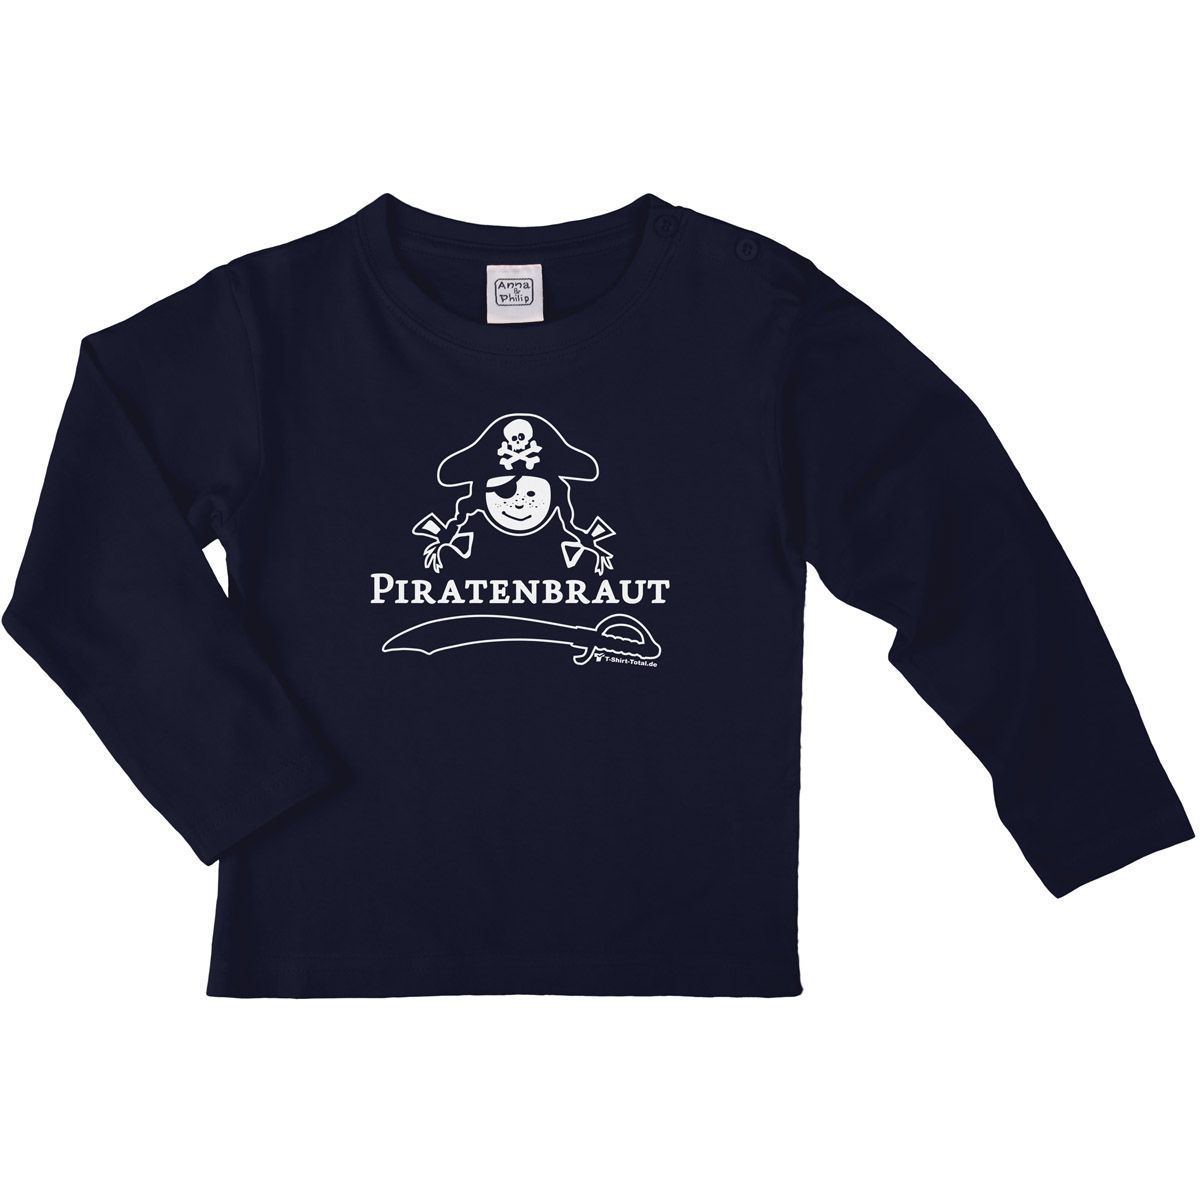 Piratenbraut Kinder Langarm Shirt navy 110 / 116